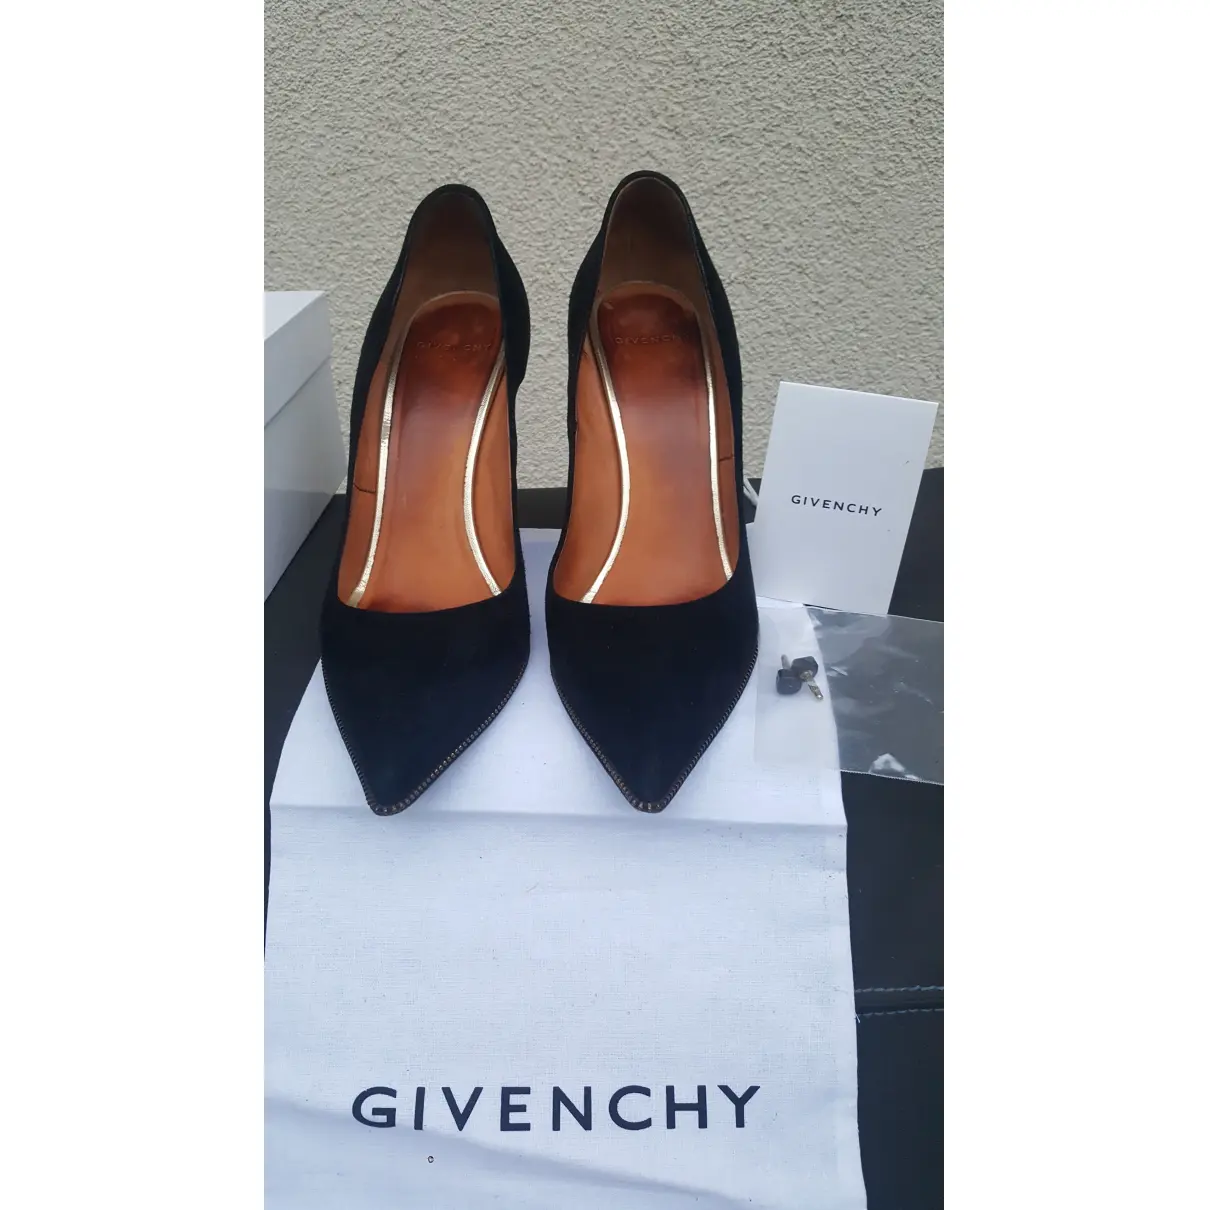 Luxury Givenchy Heels Women